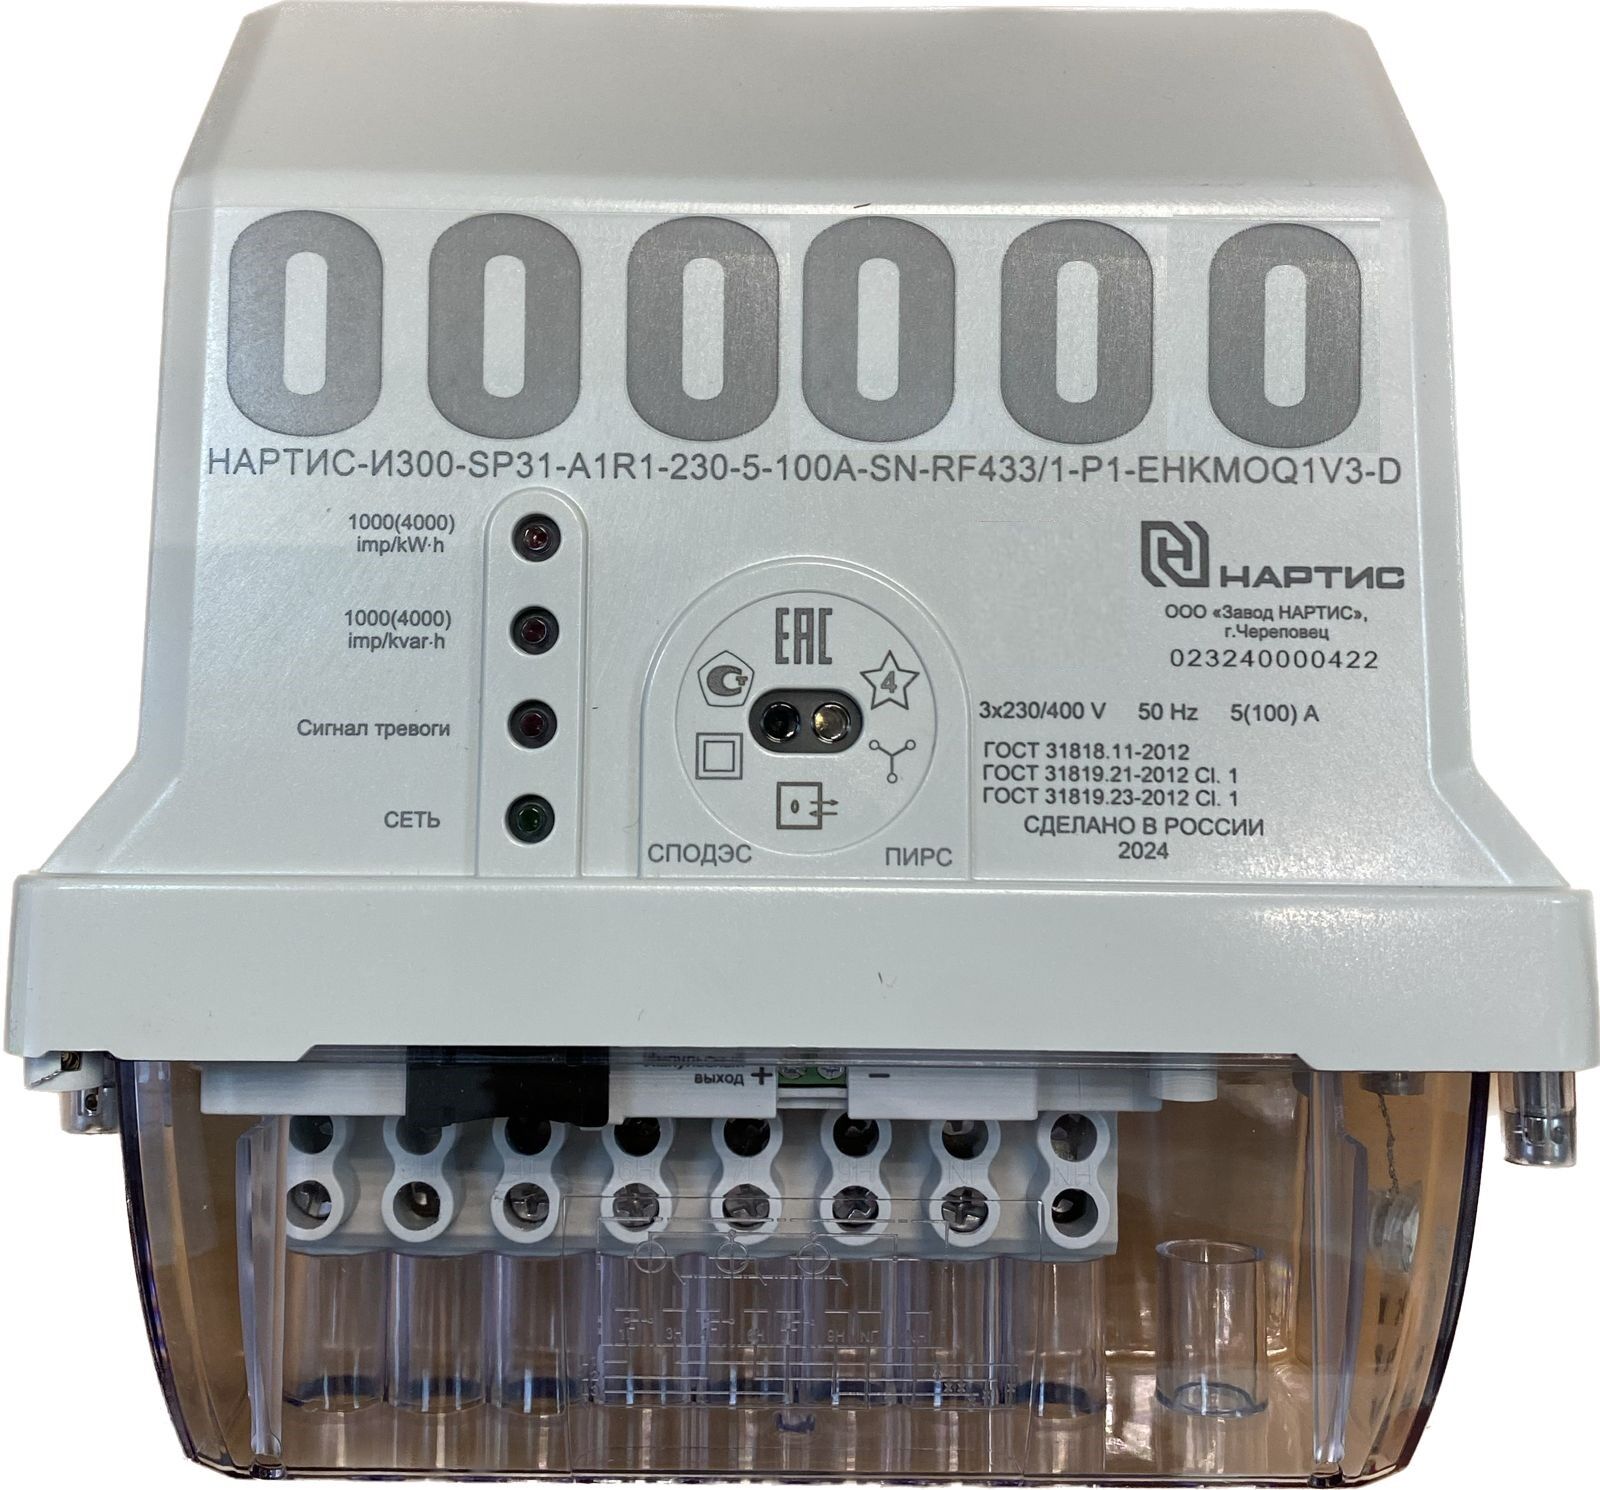 Счетчик электроэнергии НАРТИС-И300-SP31-A1R1-230-5-100A-SN-RF433/1-P1-EHKMOQ1V3-D 1